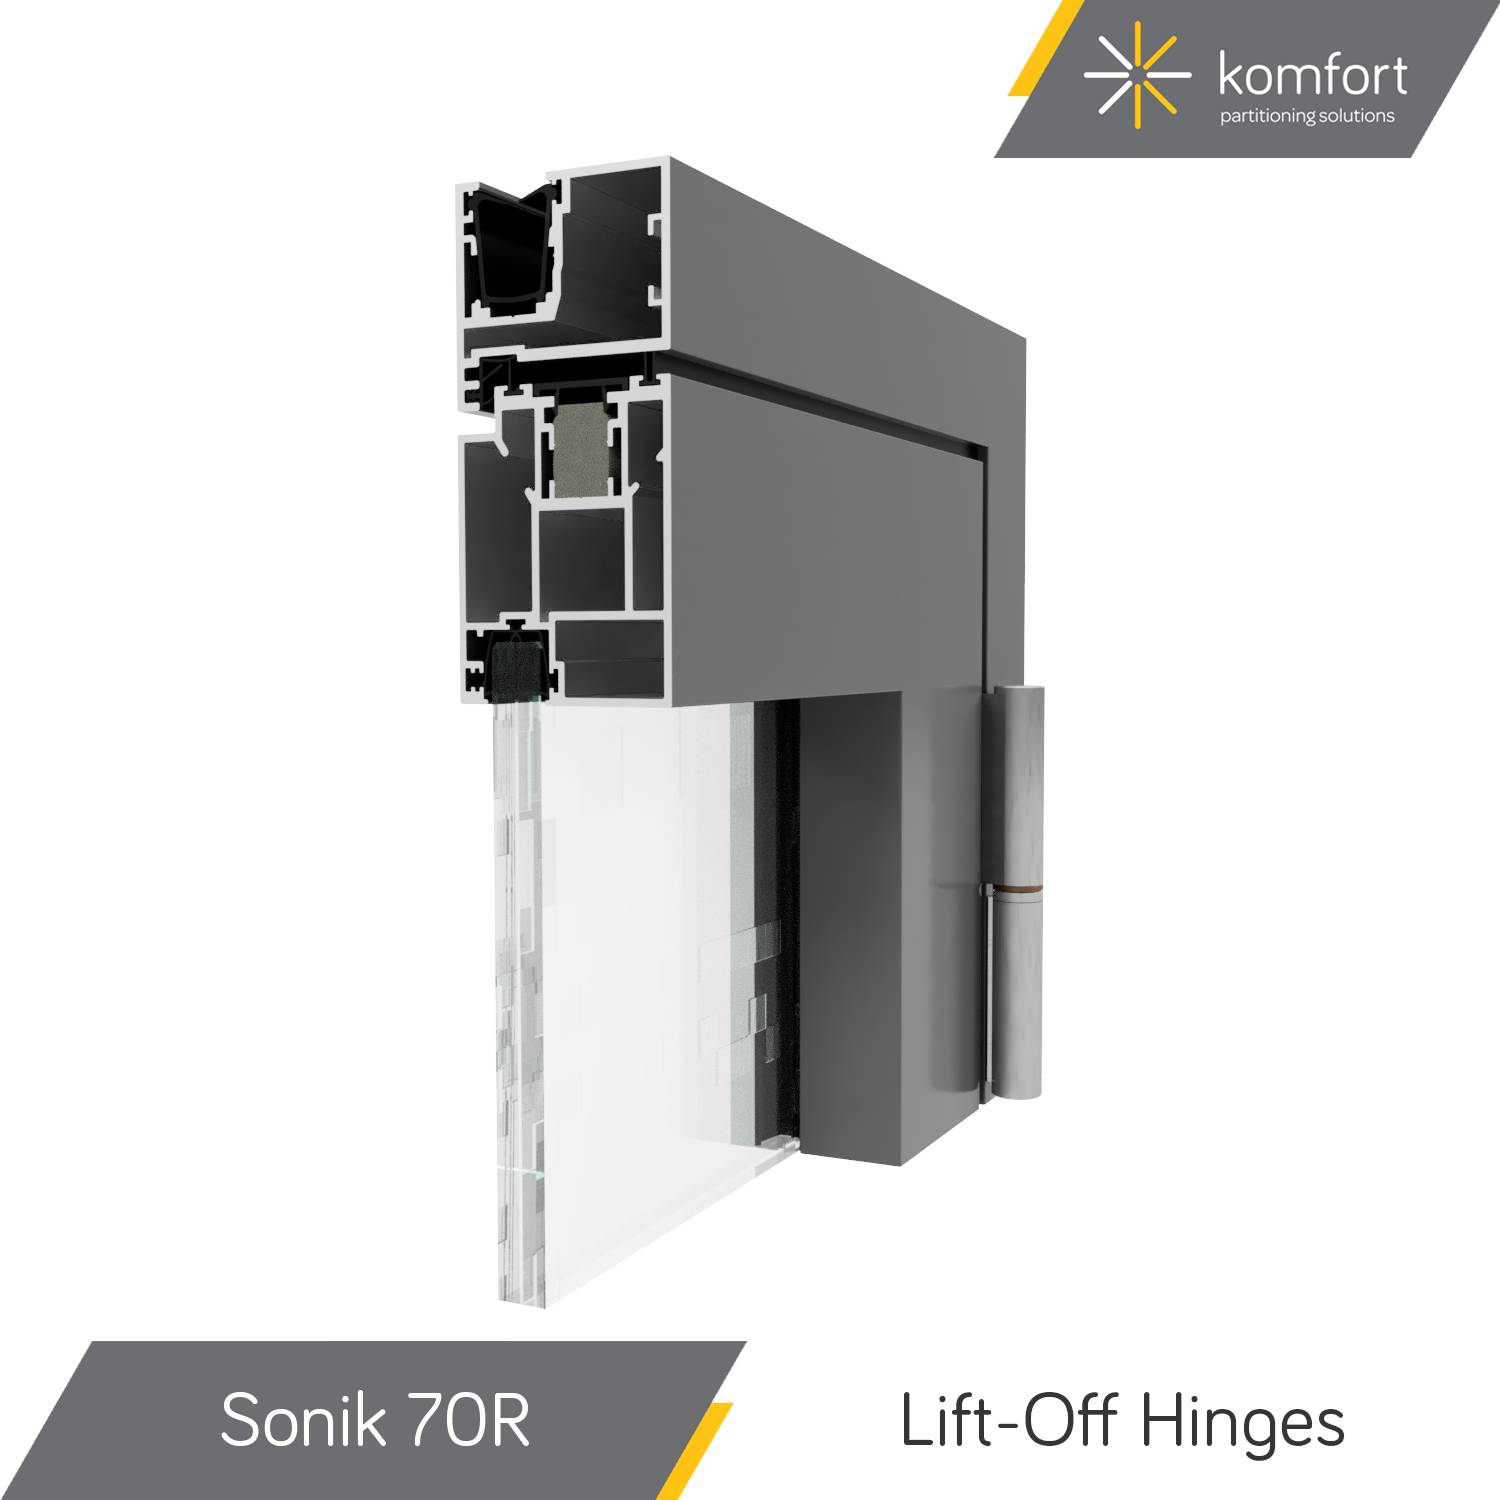 Komfort | Sonik 70R | Single & Double Glazed 54 mm Aluminium Doorsets